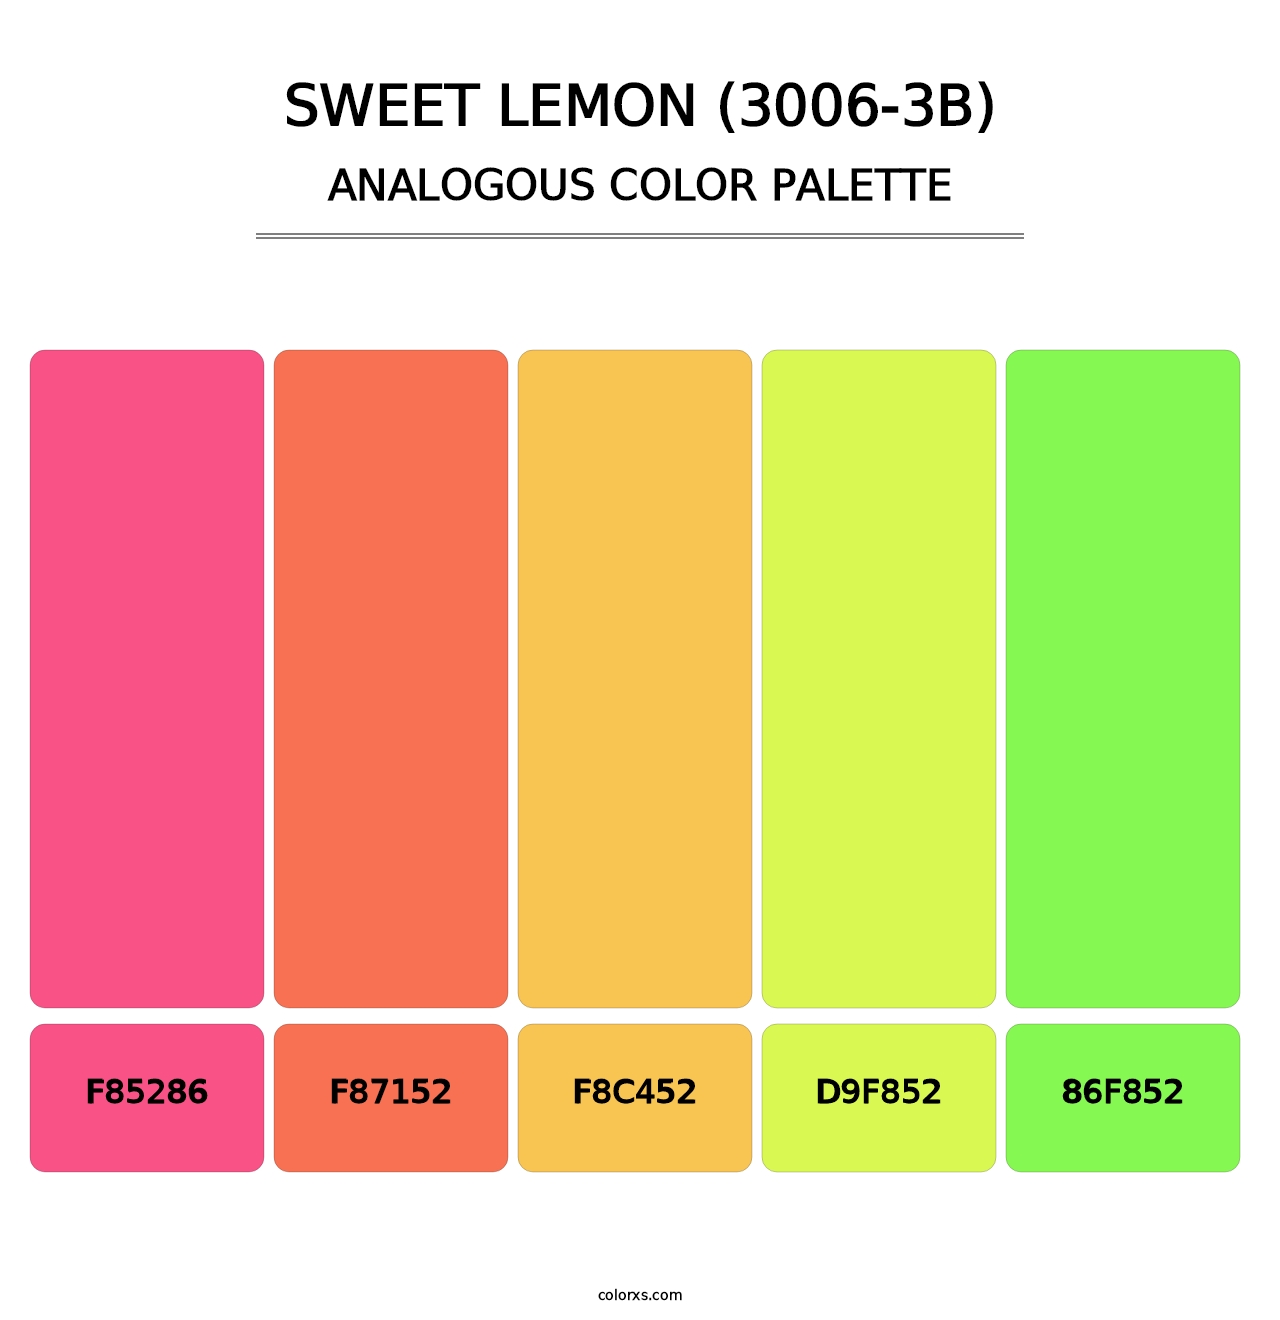 Sweet Lemon (3006-3B) - Analogous Color Palette